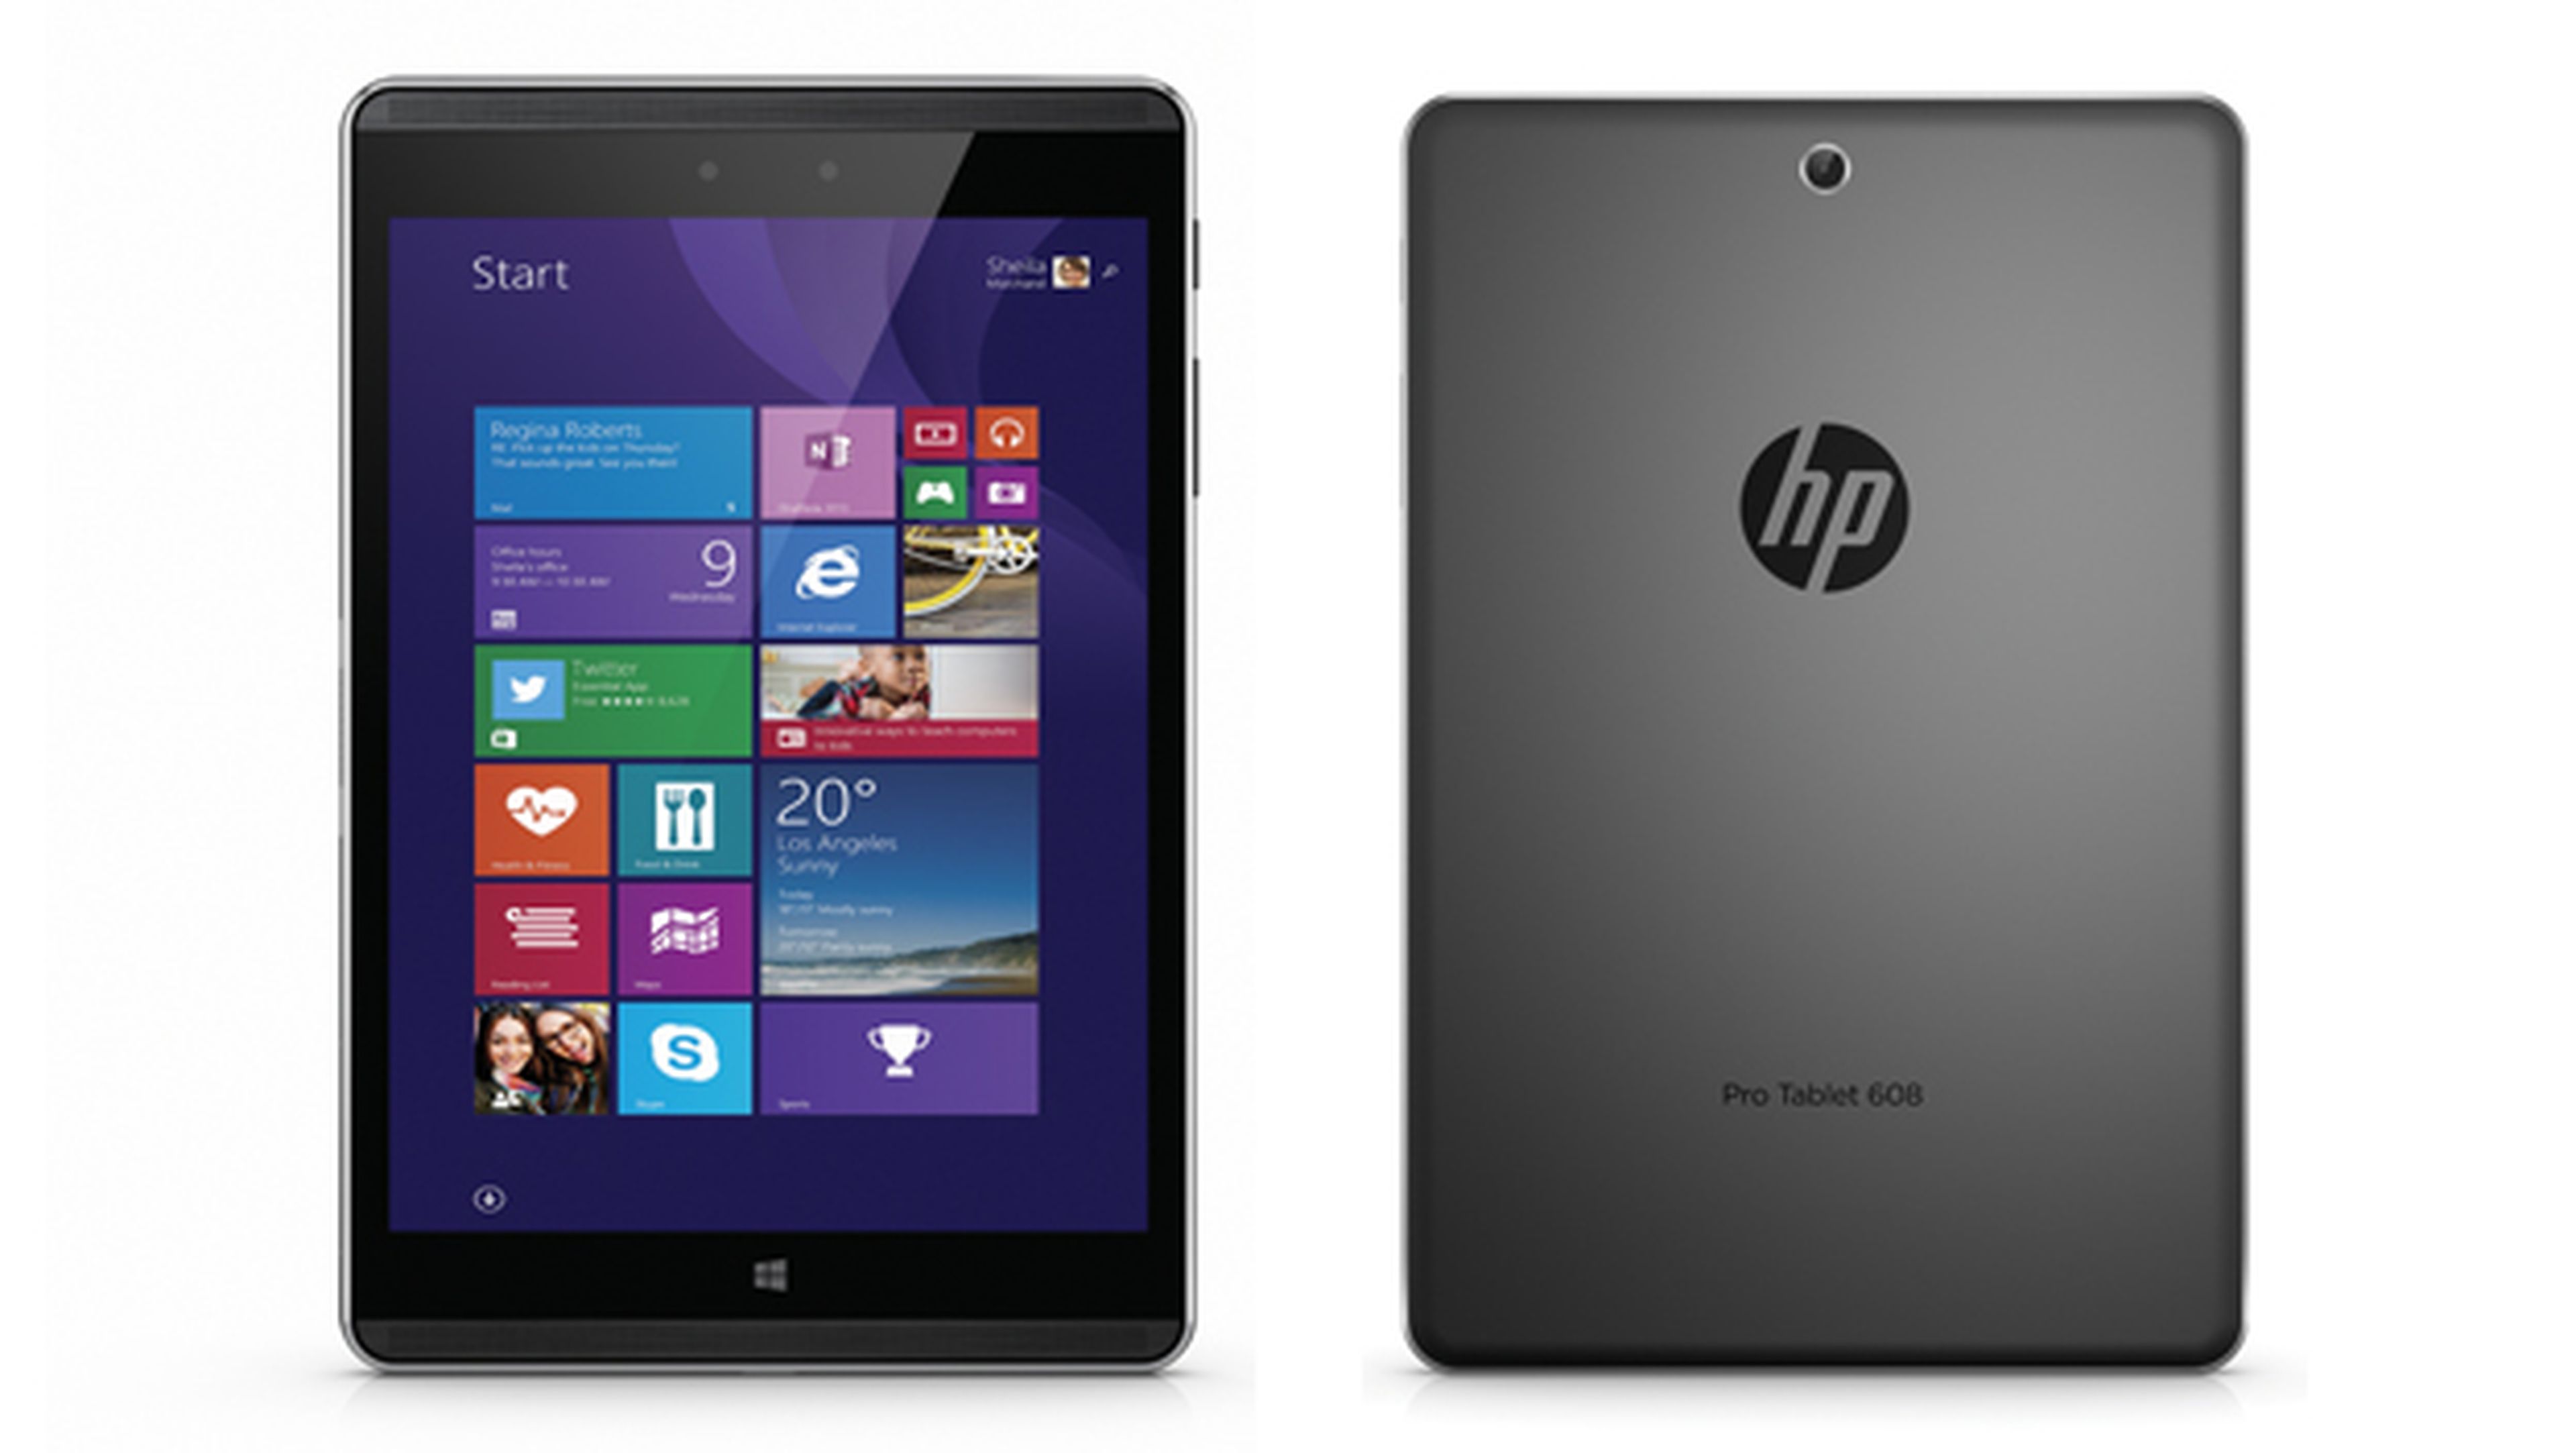 HP Pro Tablet 608, la tablet profesional de HP